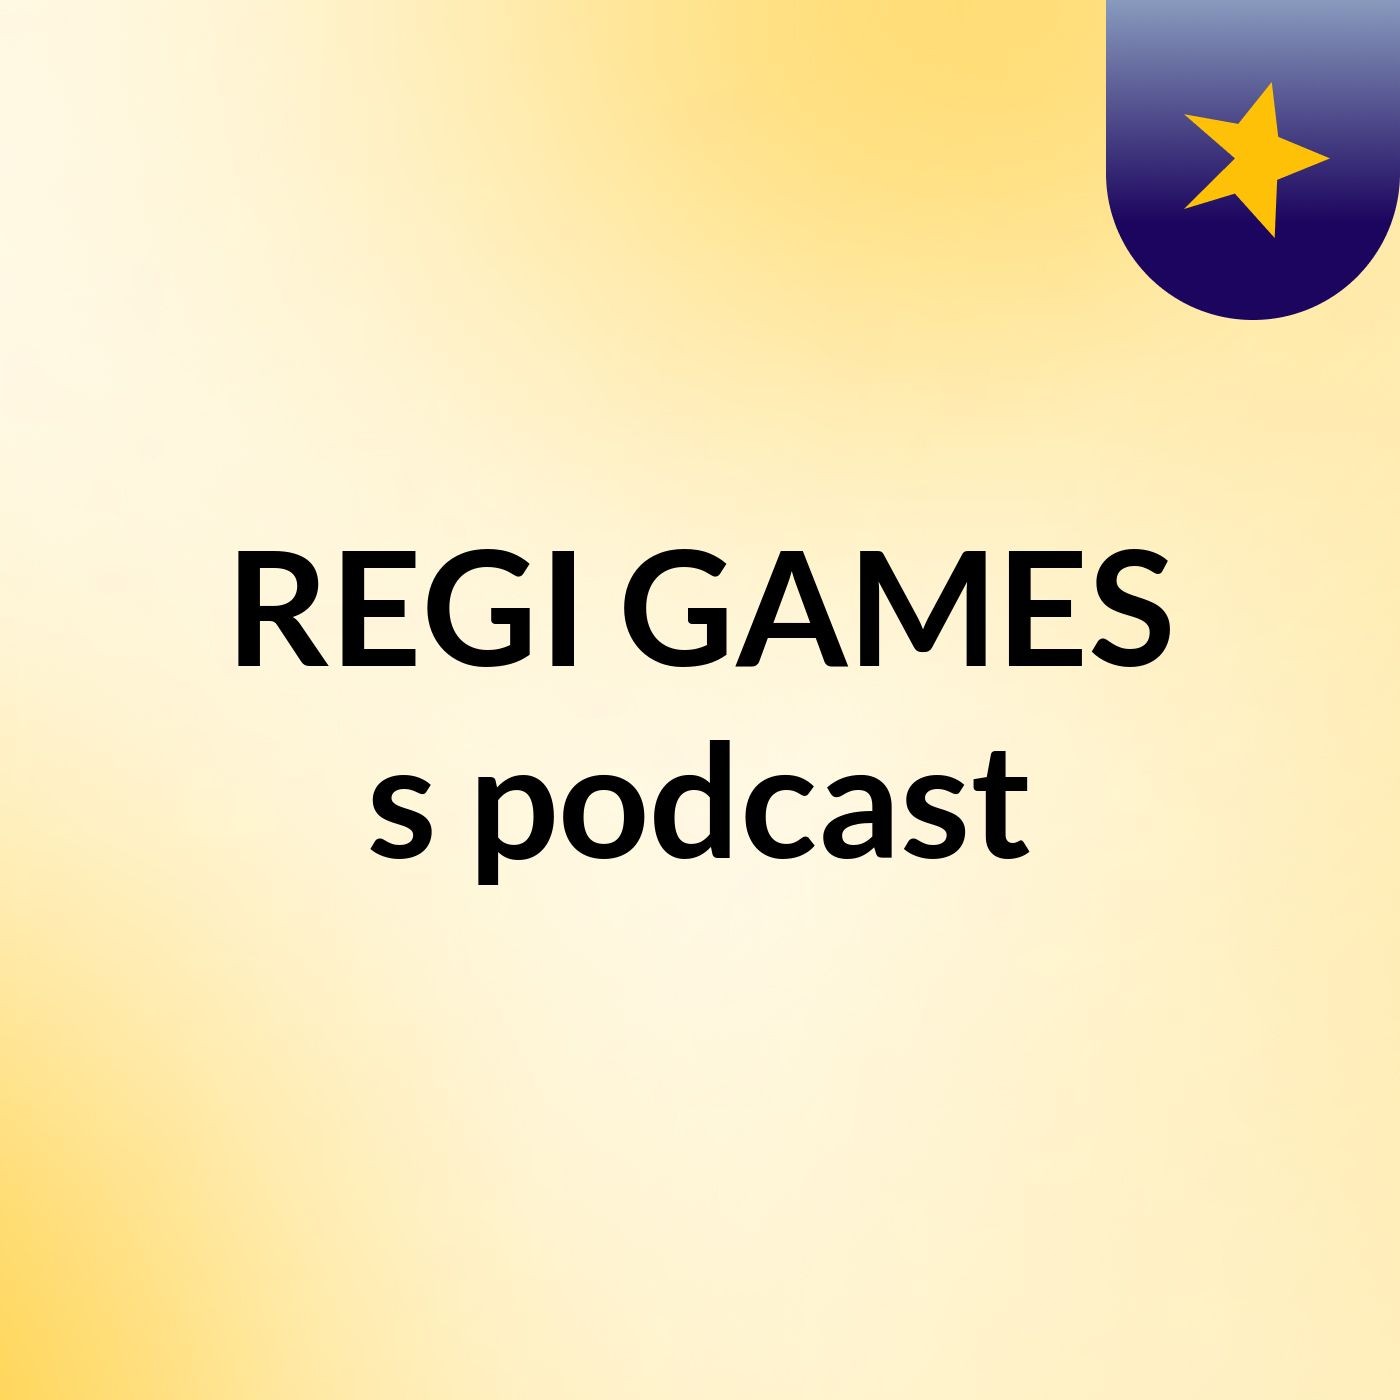 REGI GAMES's podcast